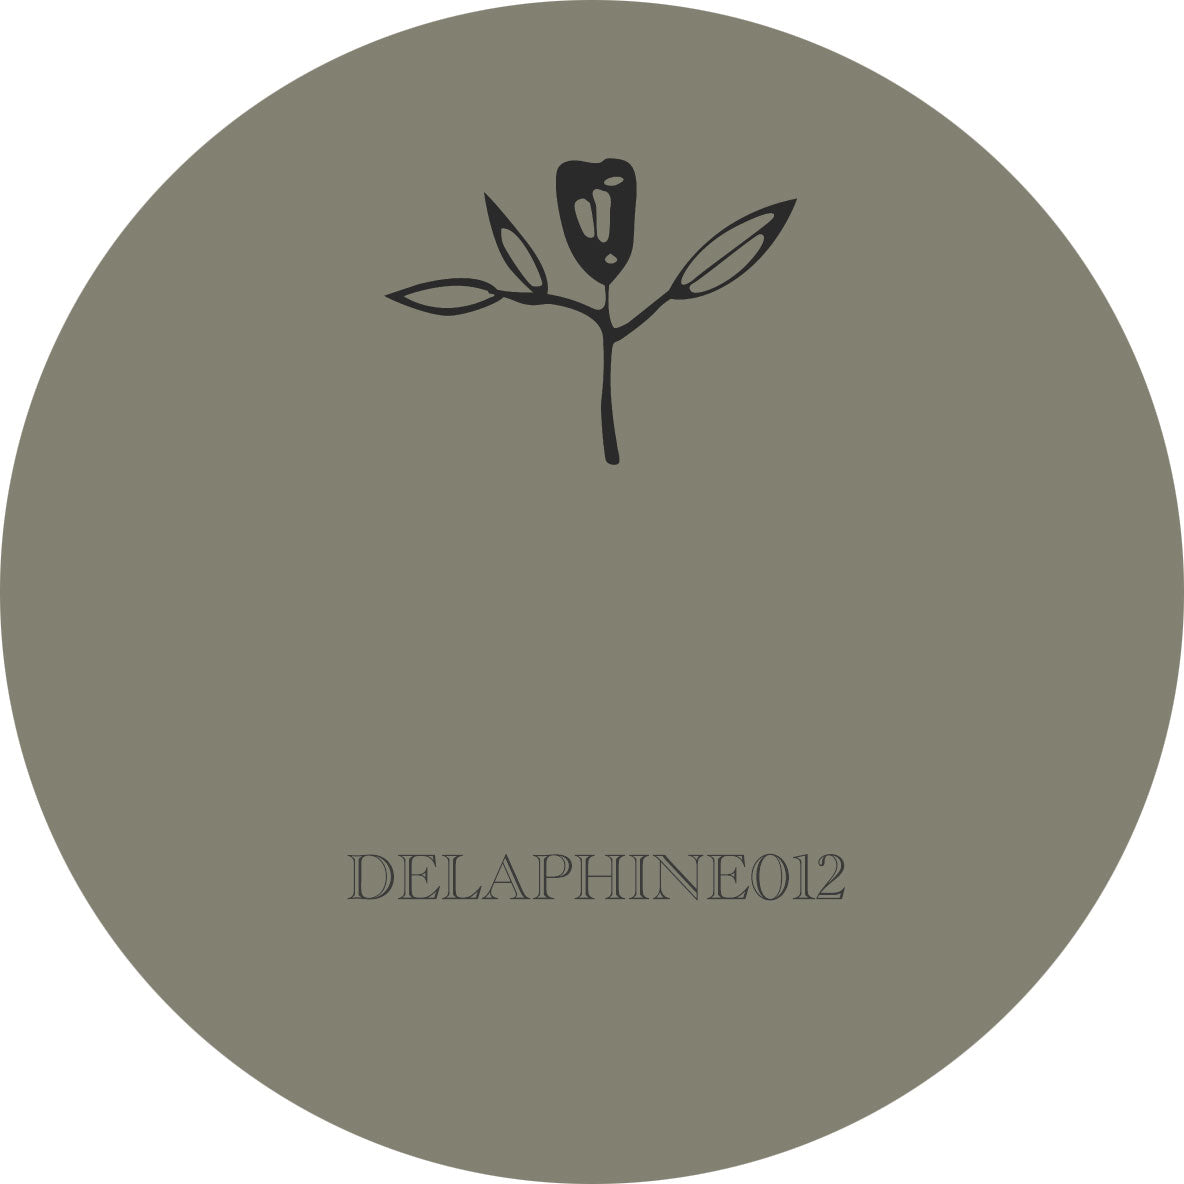 Delaphine 012